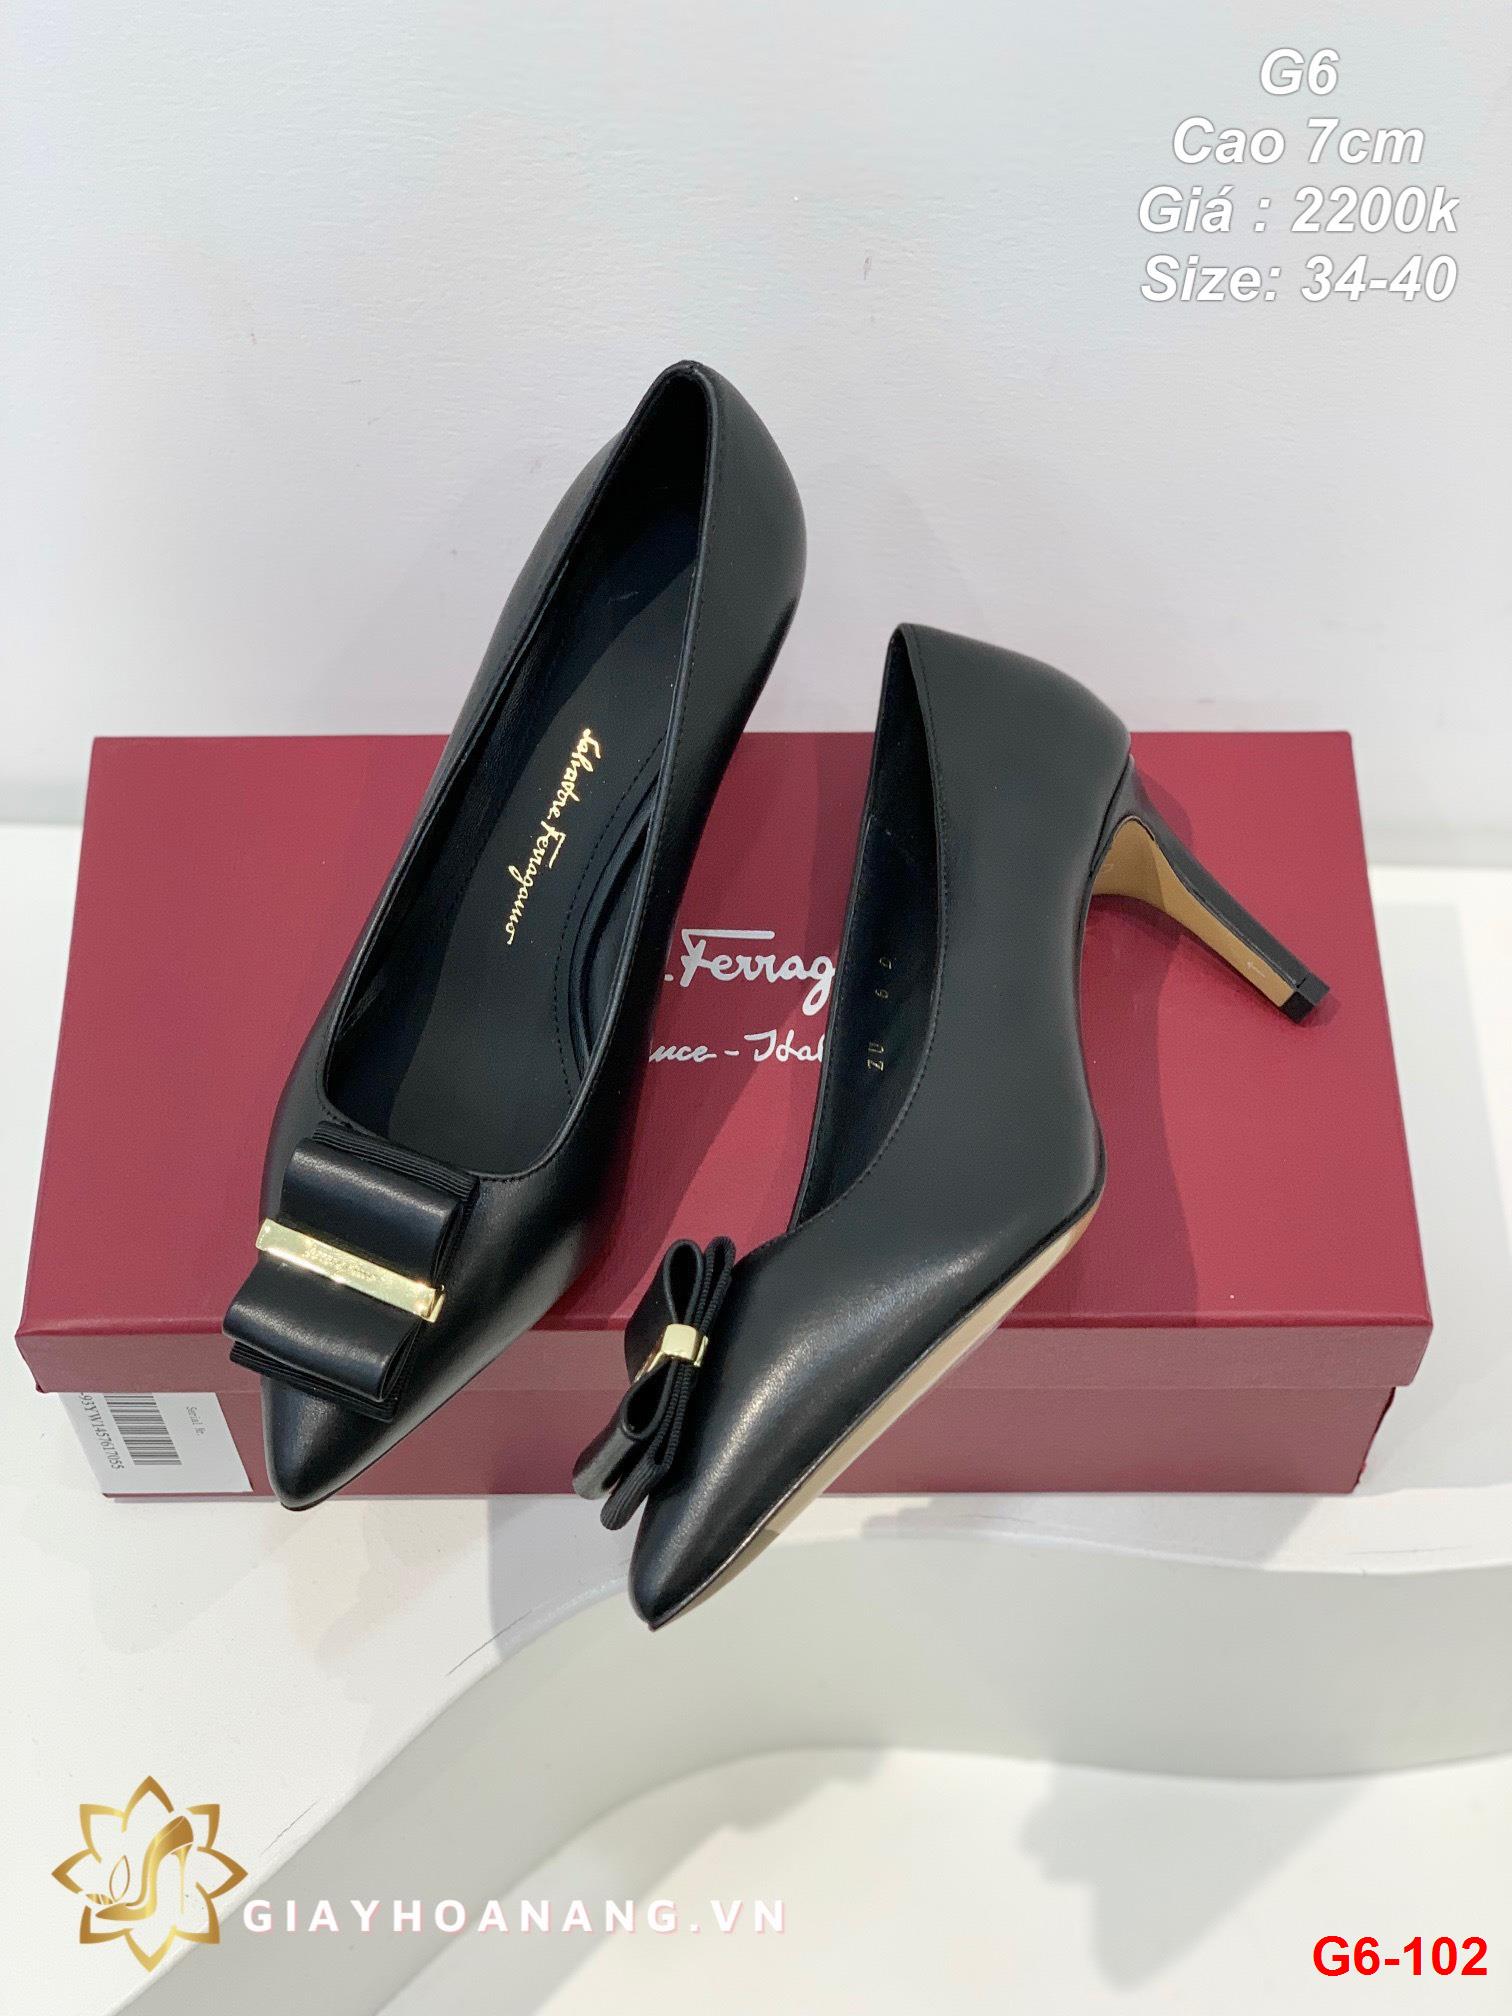 G6-102 Salvatore Ferragamo giày cao 7cm siêu cấp